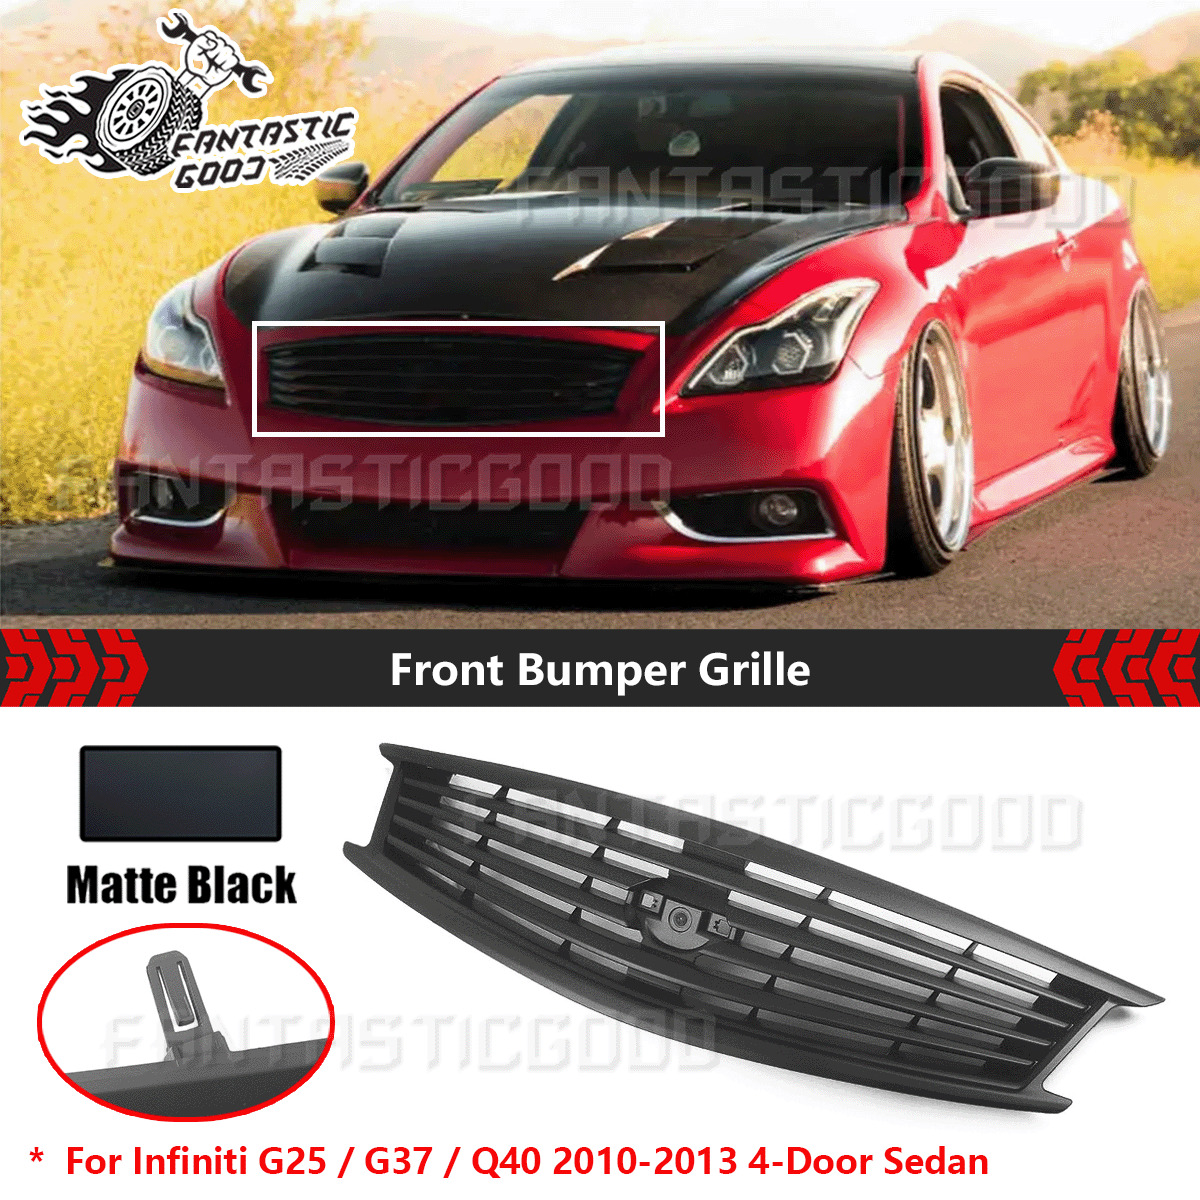 For Infiniti G25/G37/Q40 2010-2013 4-Door Sedan丨Matte Black Front Bumper Grille